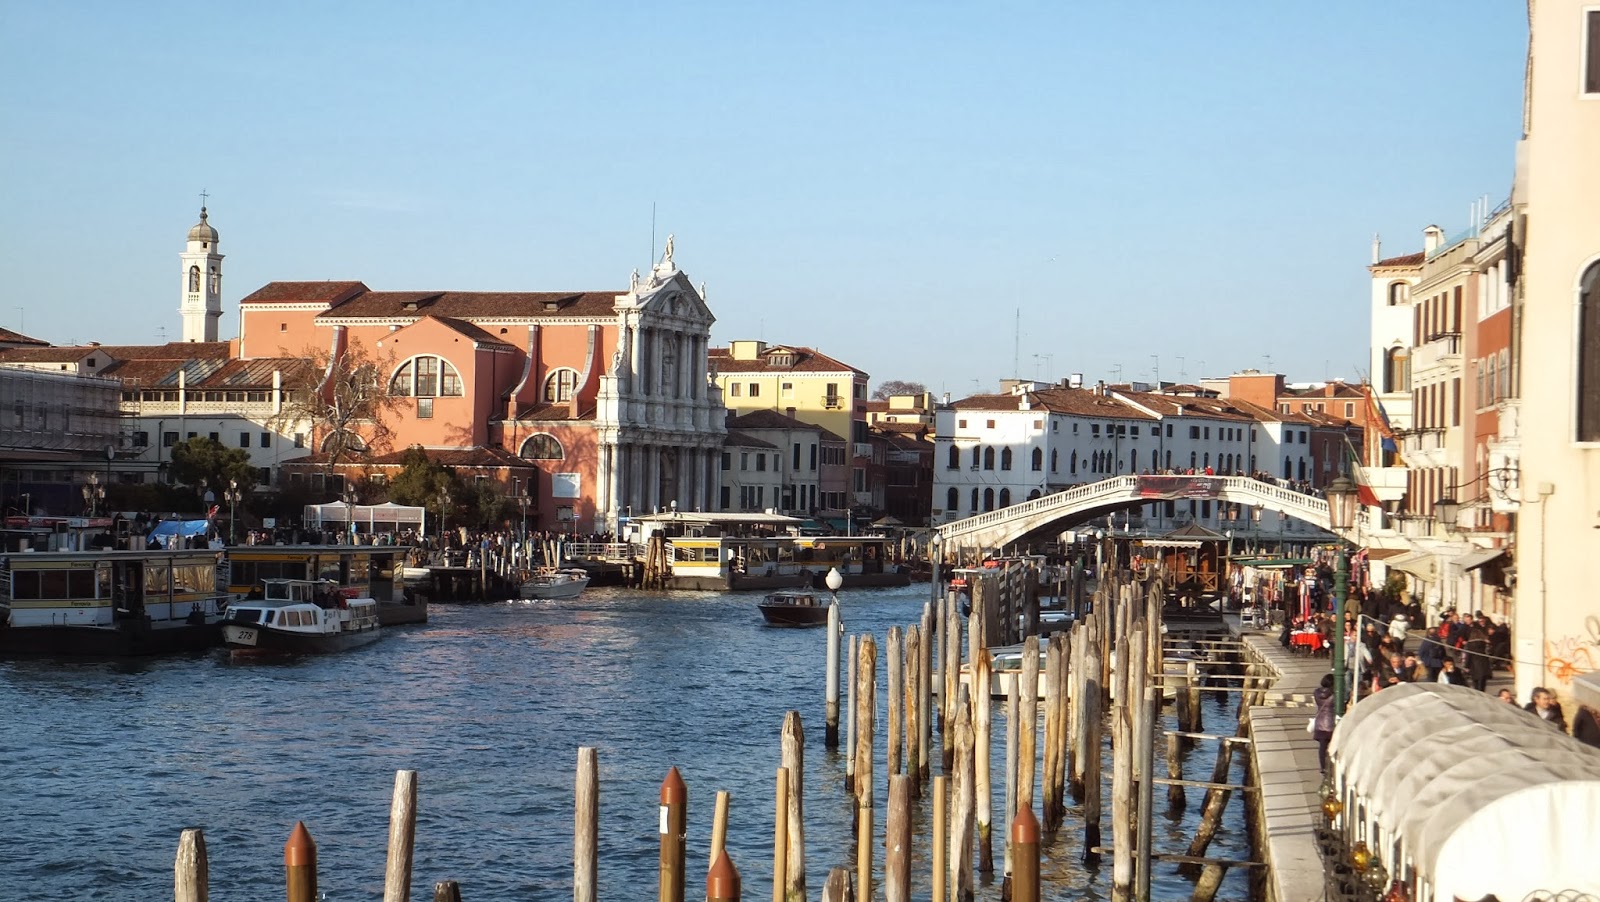 Ponte degli Scalzi, Venecia, Italia, Elisa N, Blog de Viajes, Lifestyle, Travel